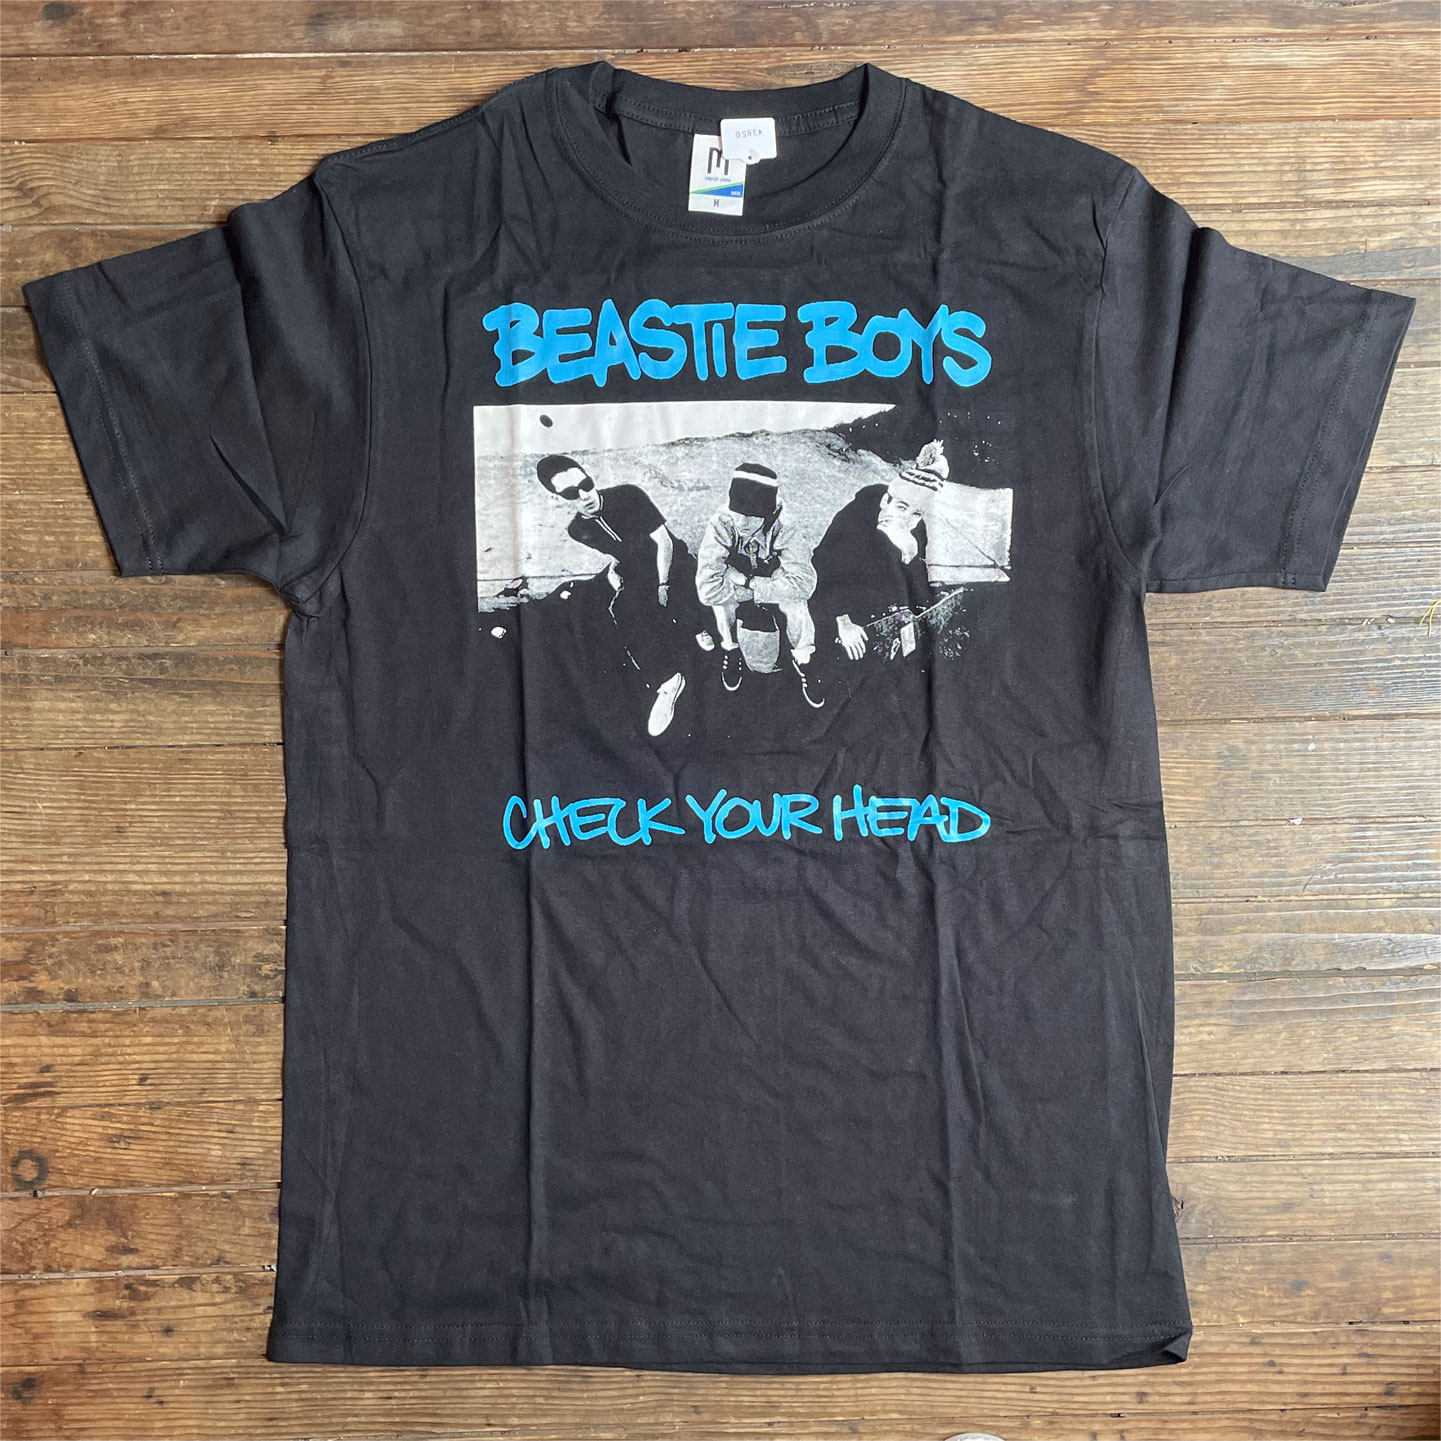 BEASTIE BOYS Tシャツ check your head XL検索用 - Tシャツ/カットソー